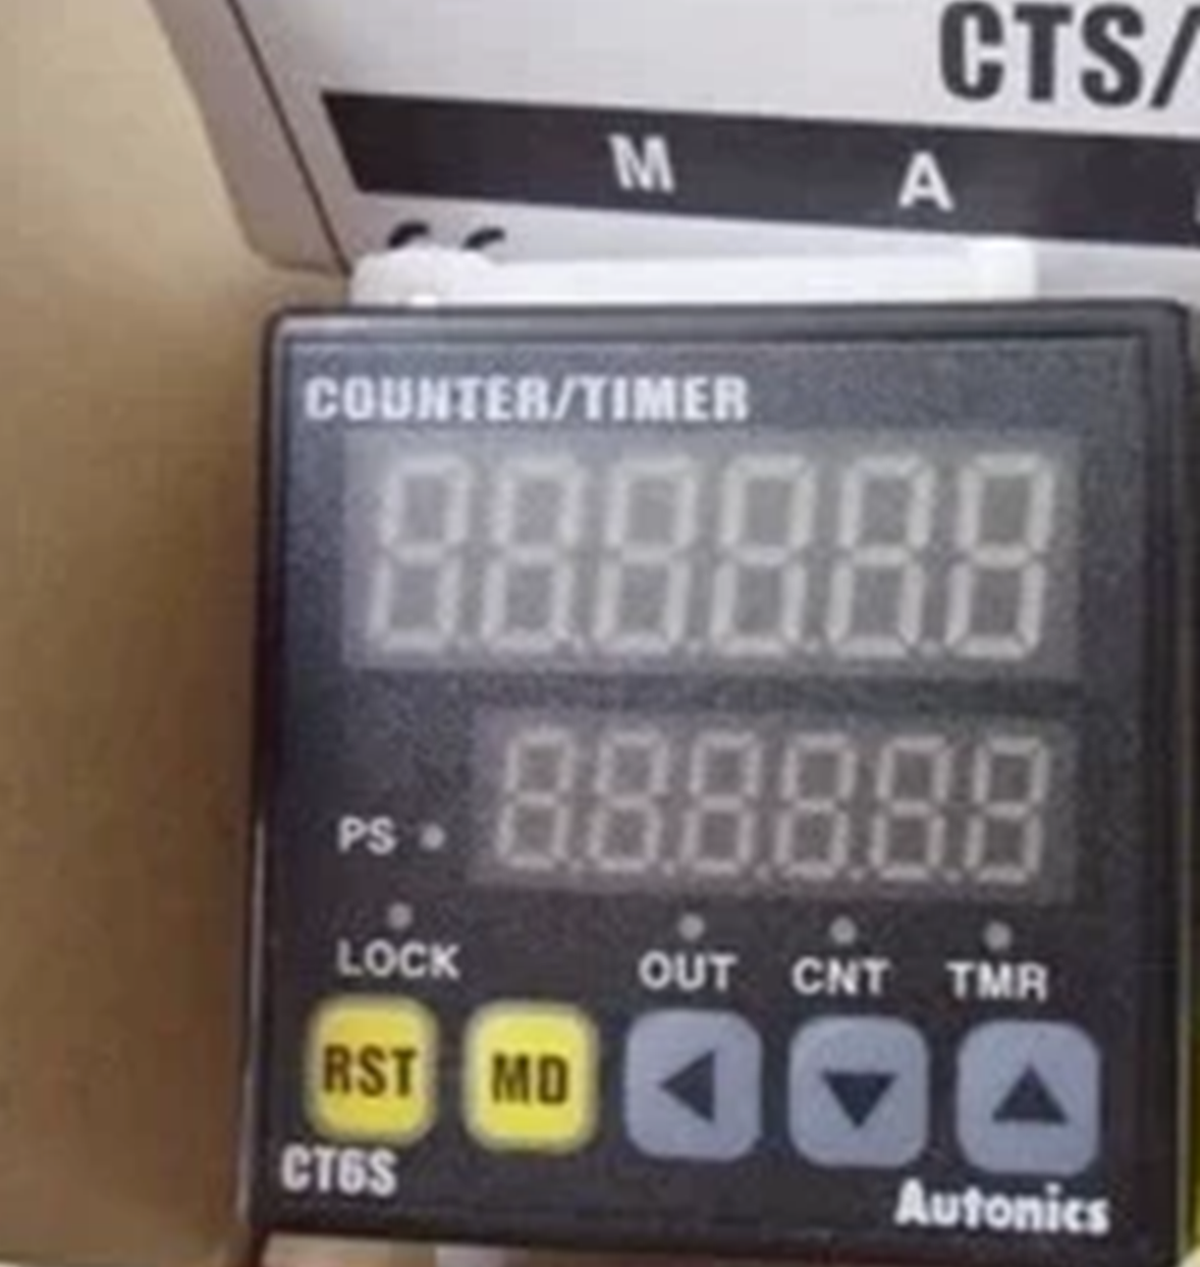 AUTONICS CT6S-1P2 Counter/Timer